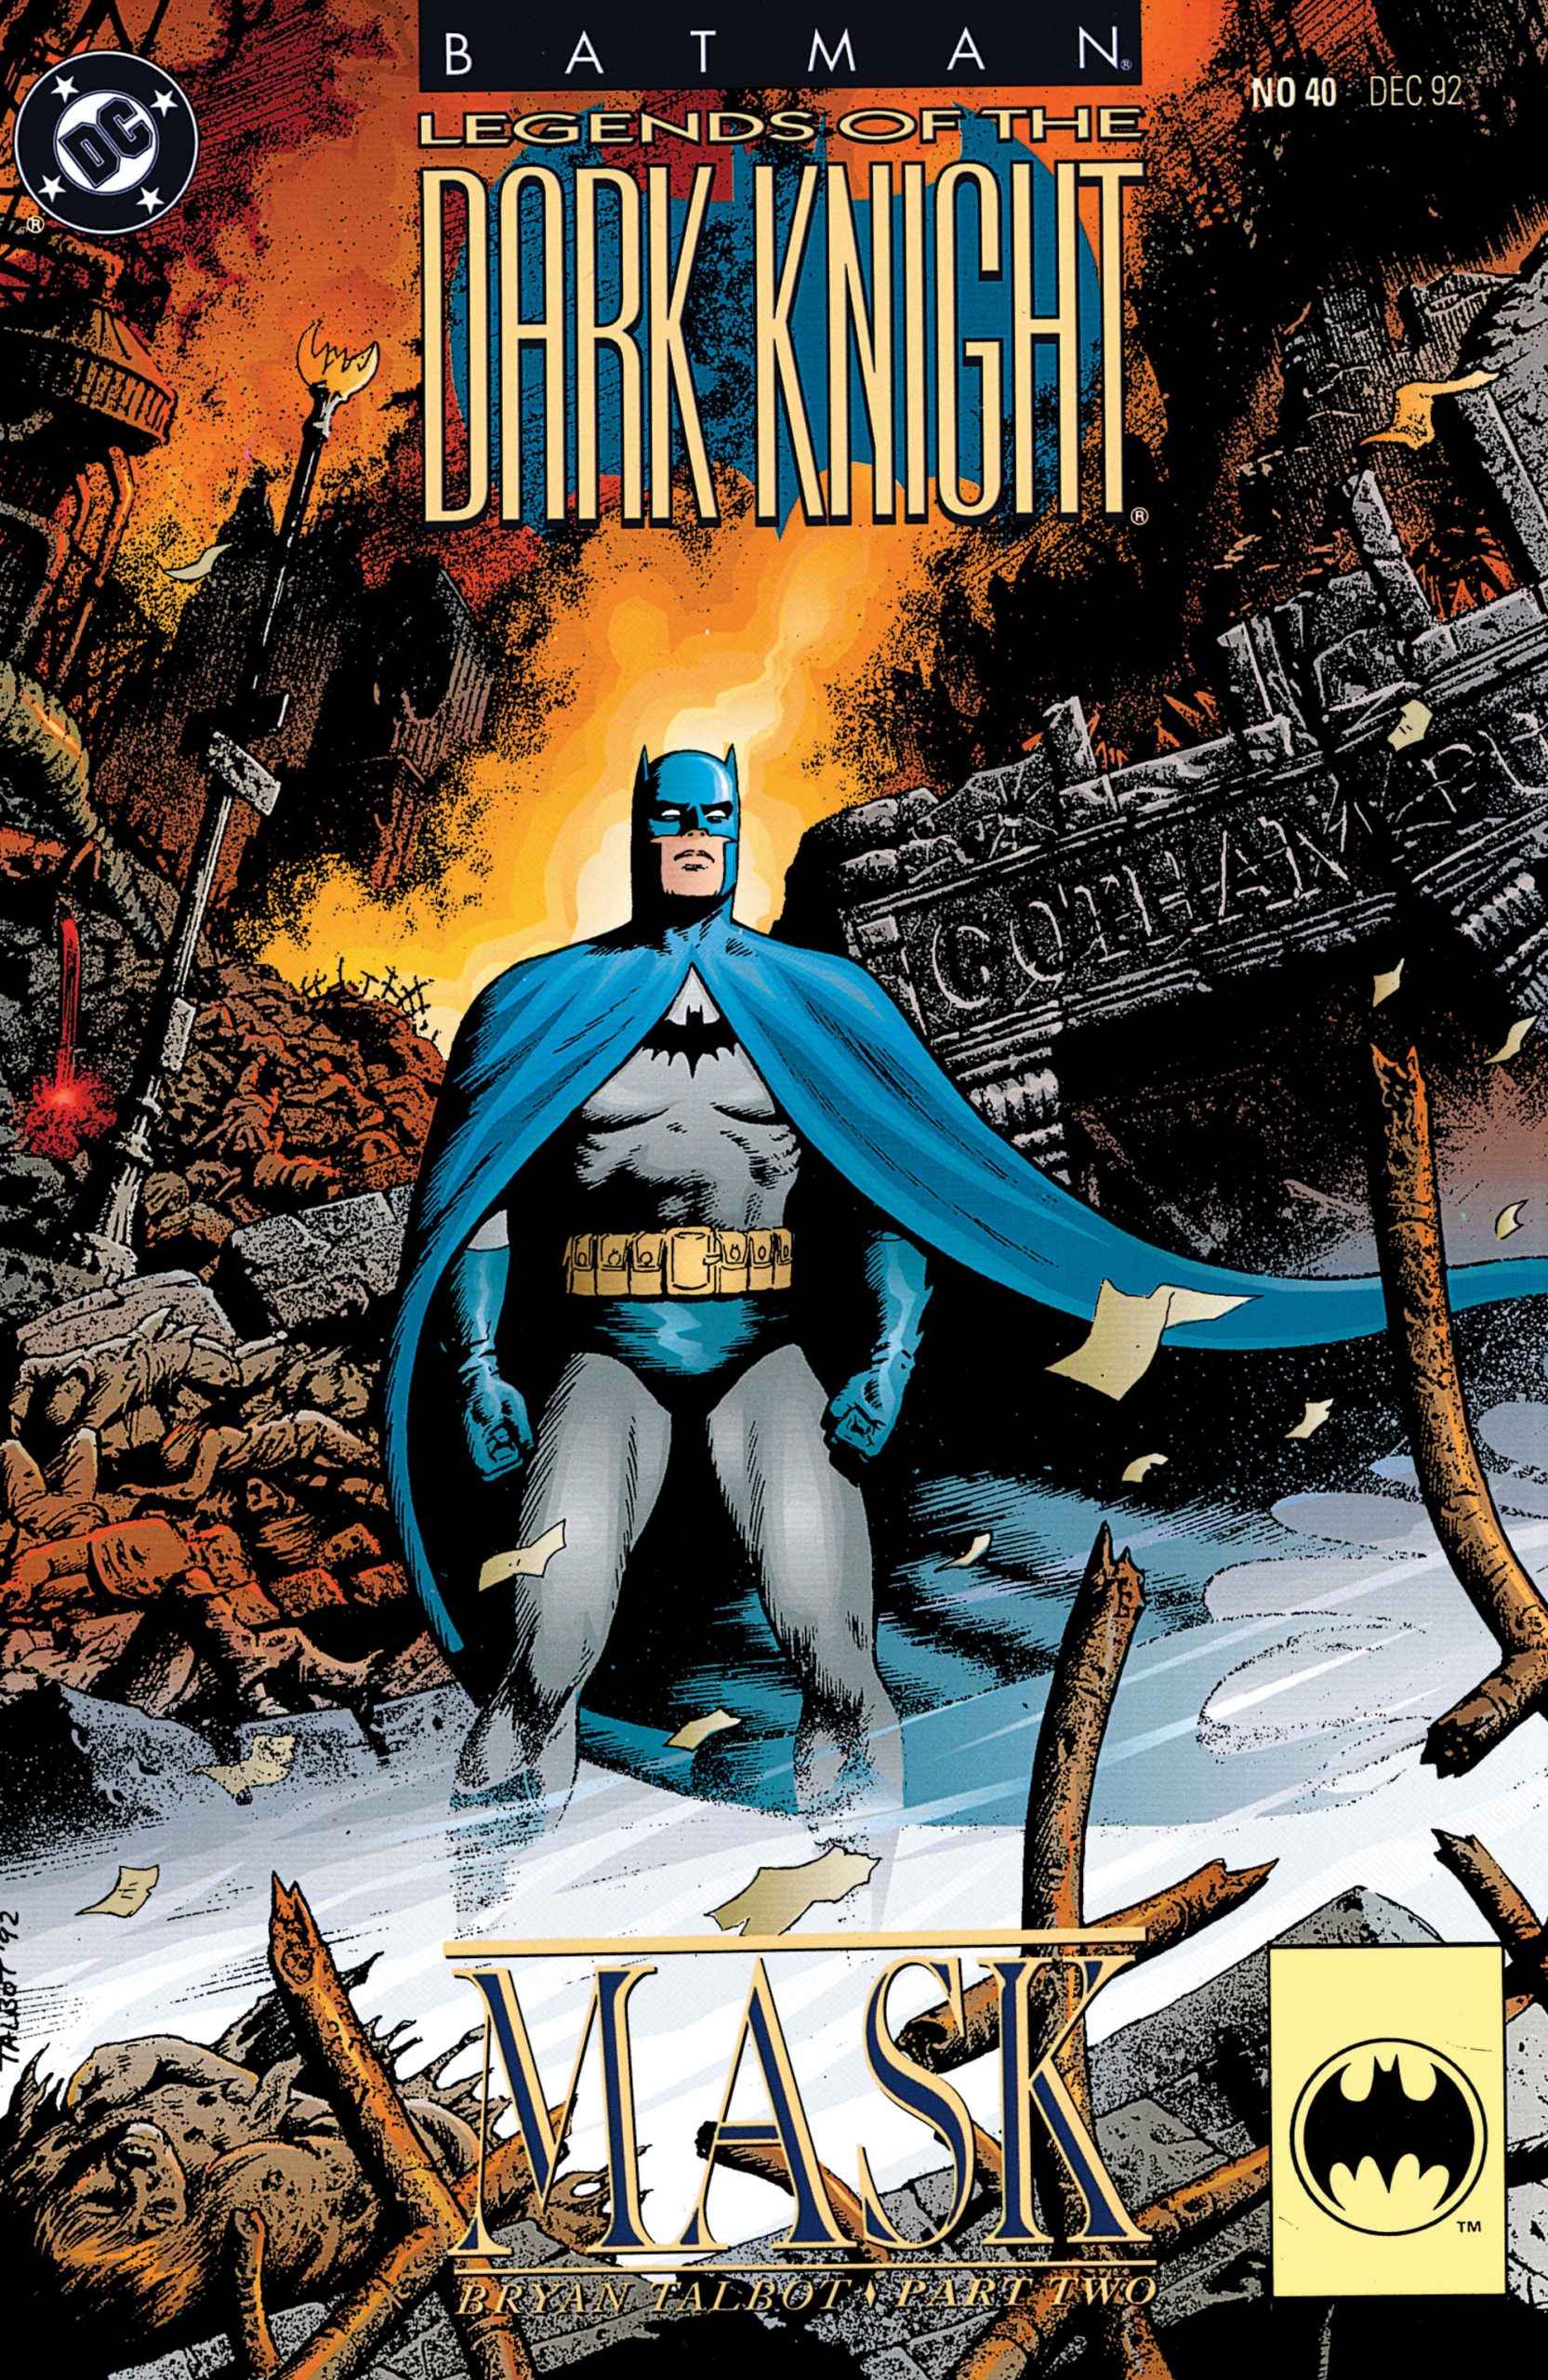 Batman: Legends of the Dark Knight #40 - cover by Bryan Talbot